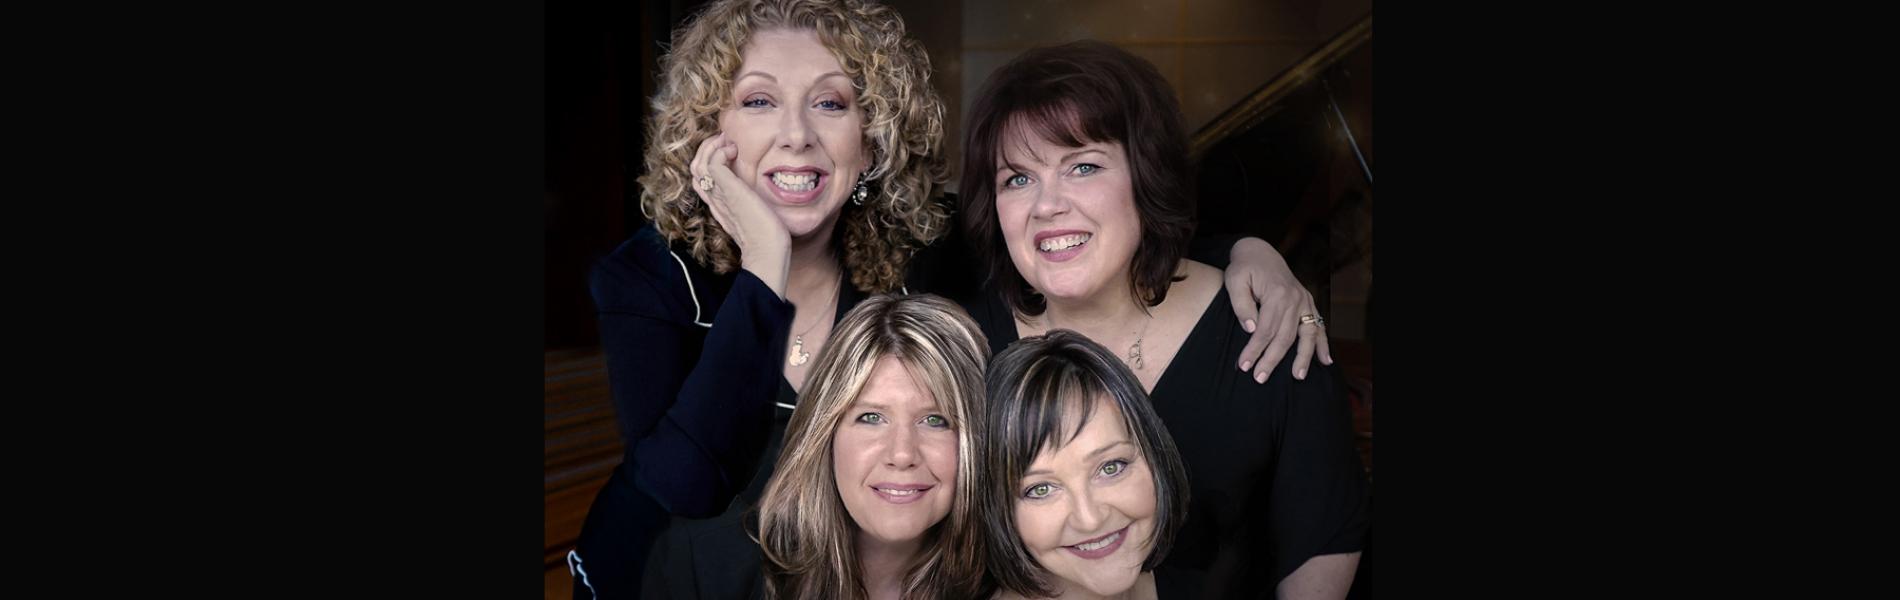 group photo of Bette MacDonald, Heather Rankin, Lucy MacNeil and Jenn Sheppard.